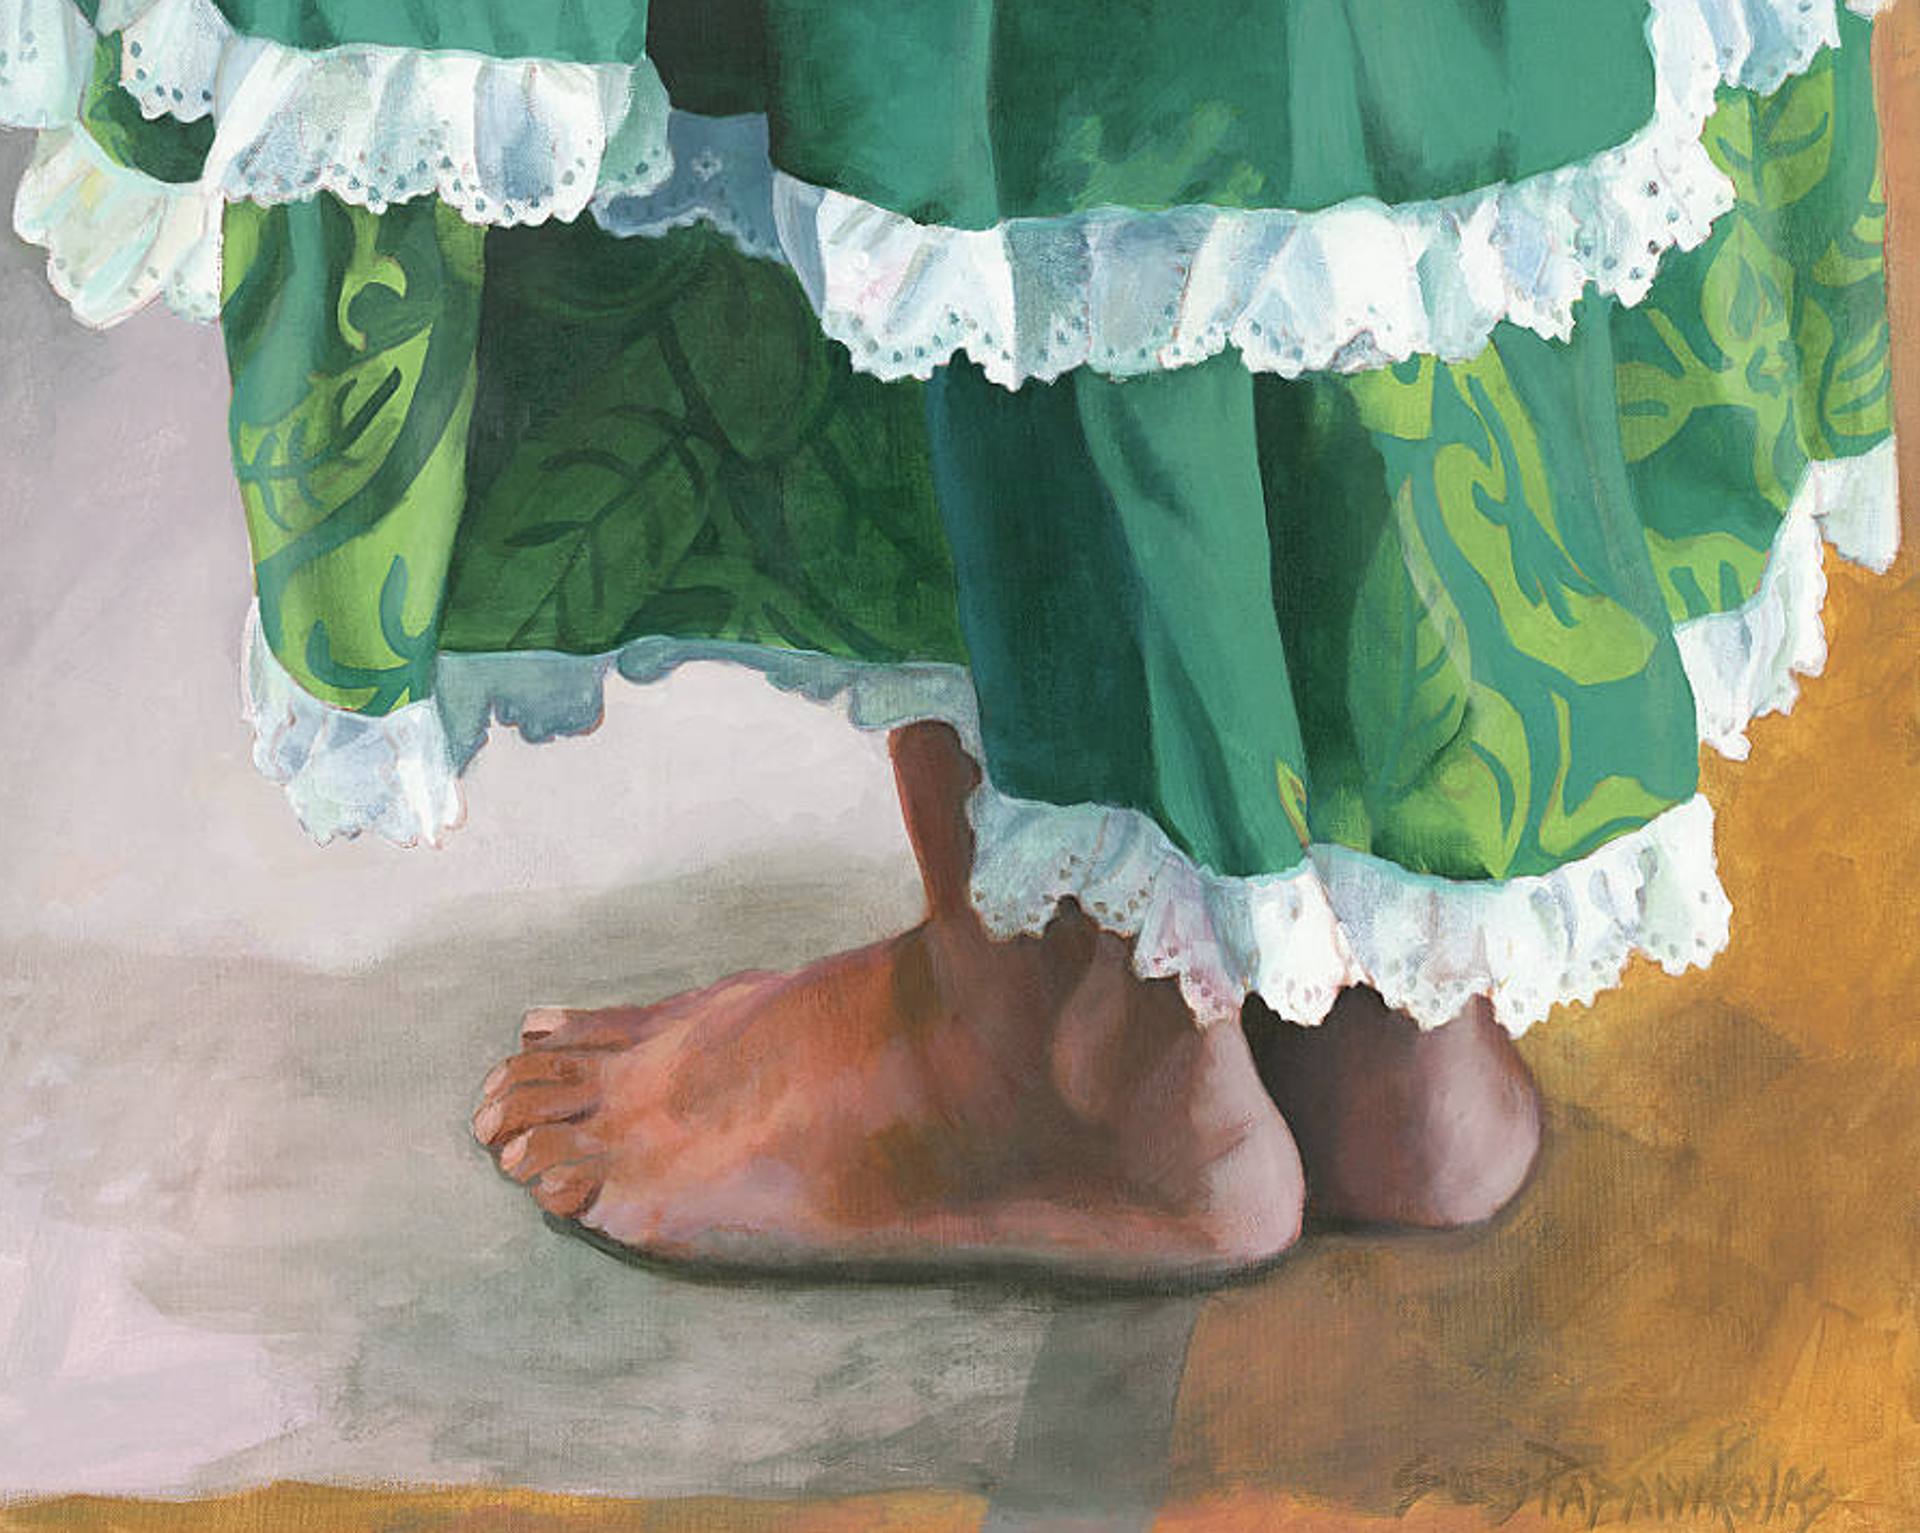 Dancers Feet in Green by Suzy Papanikolas